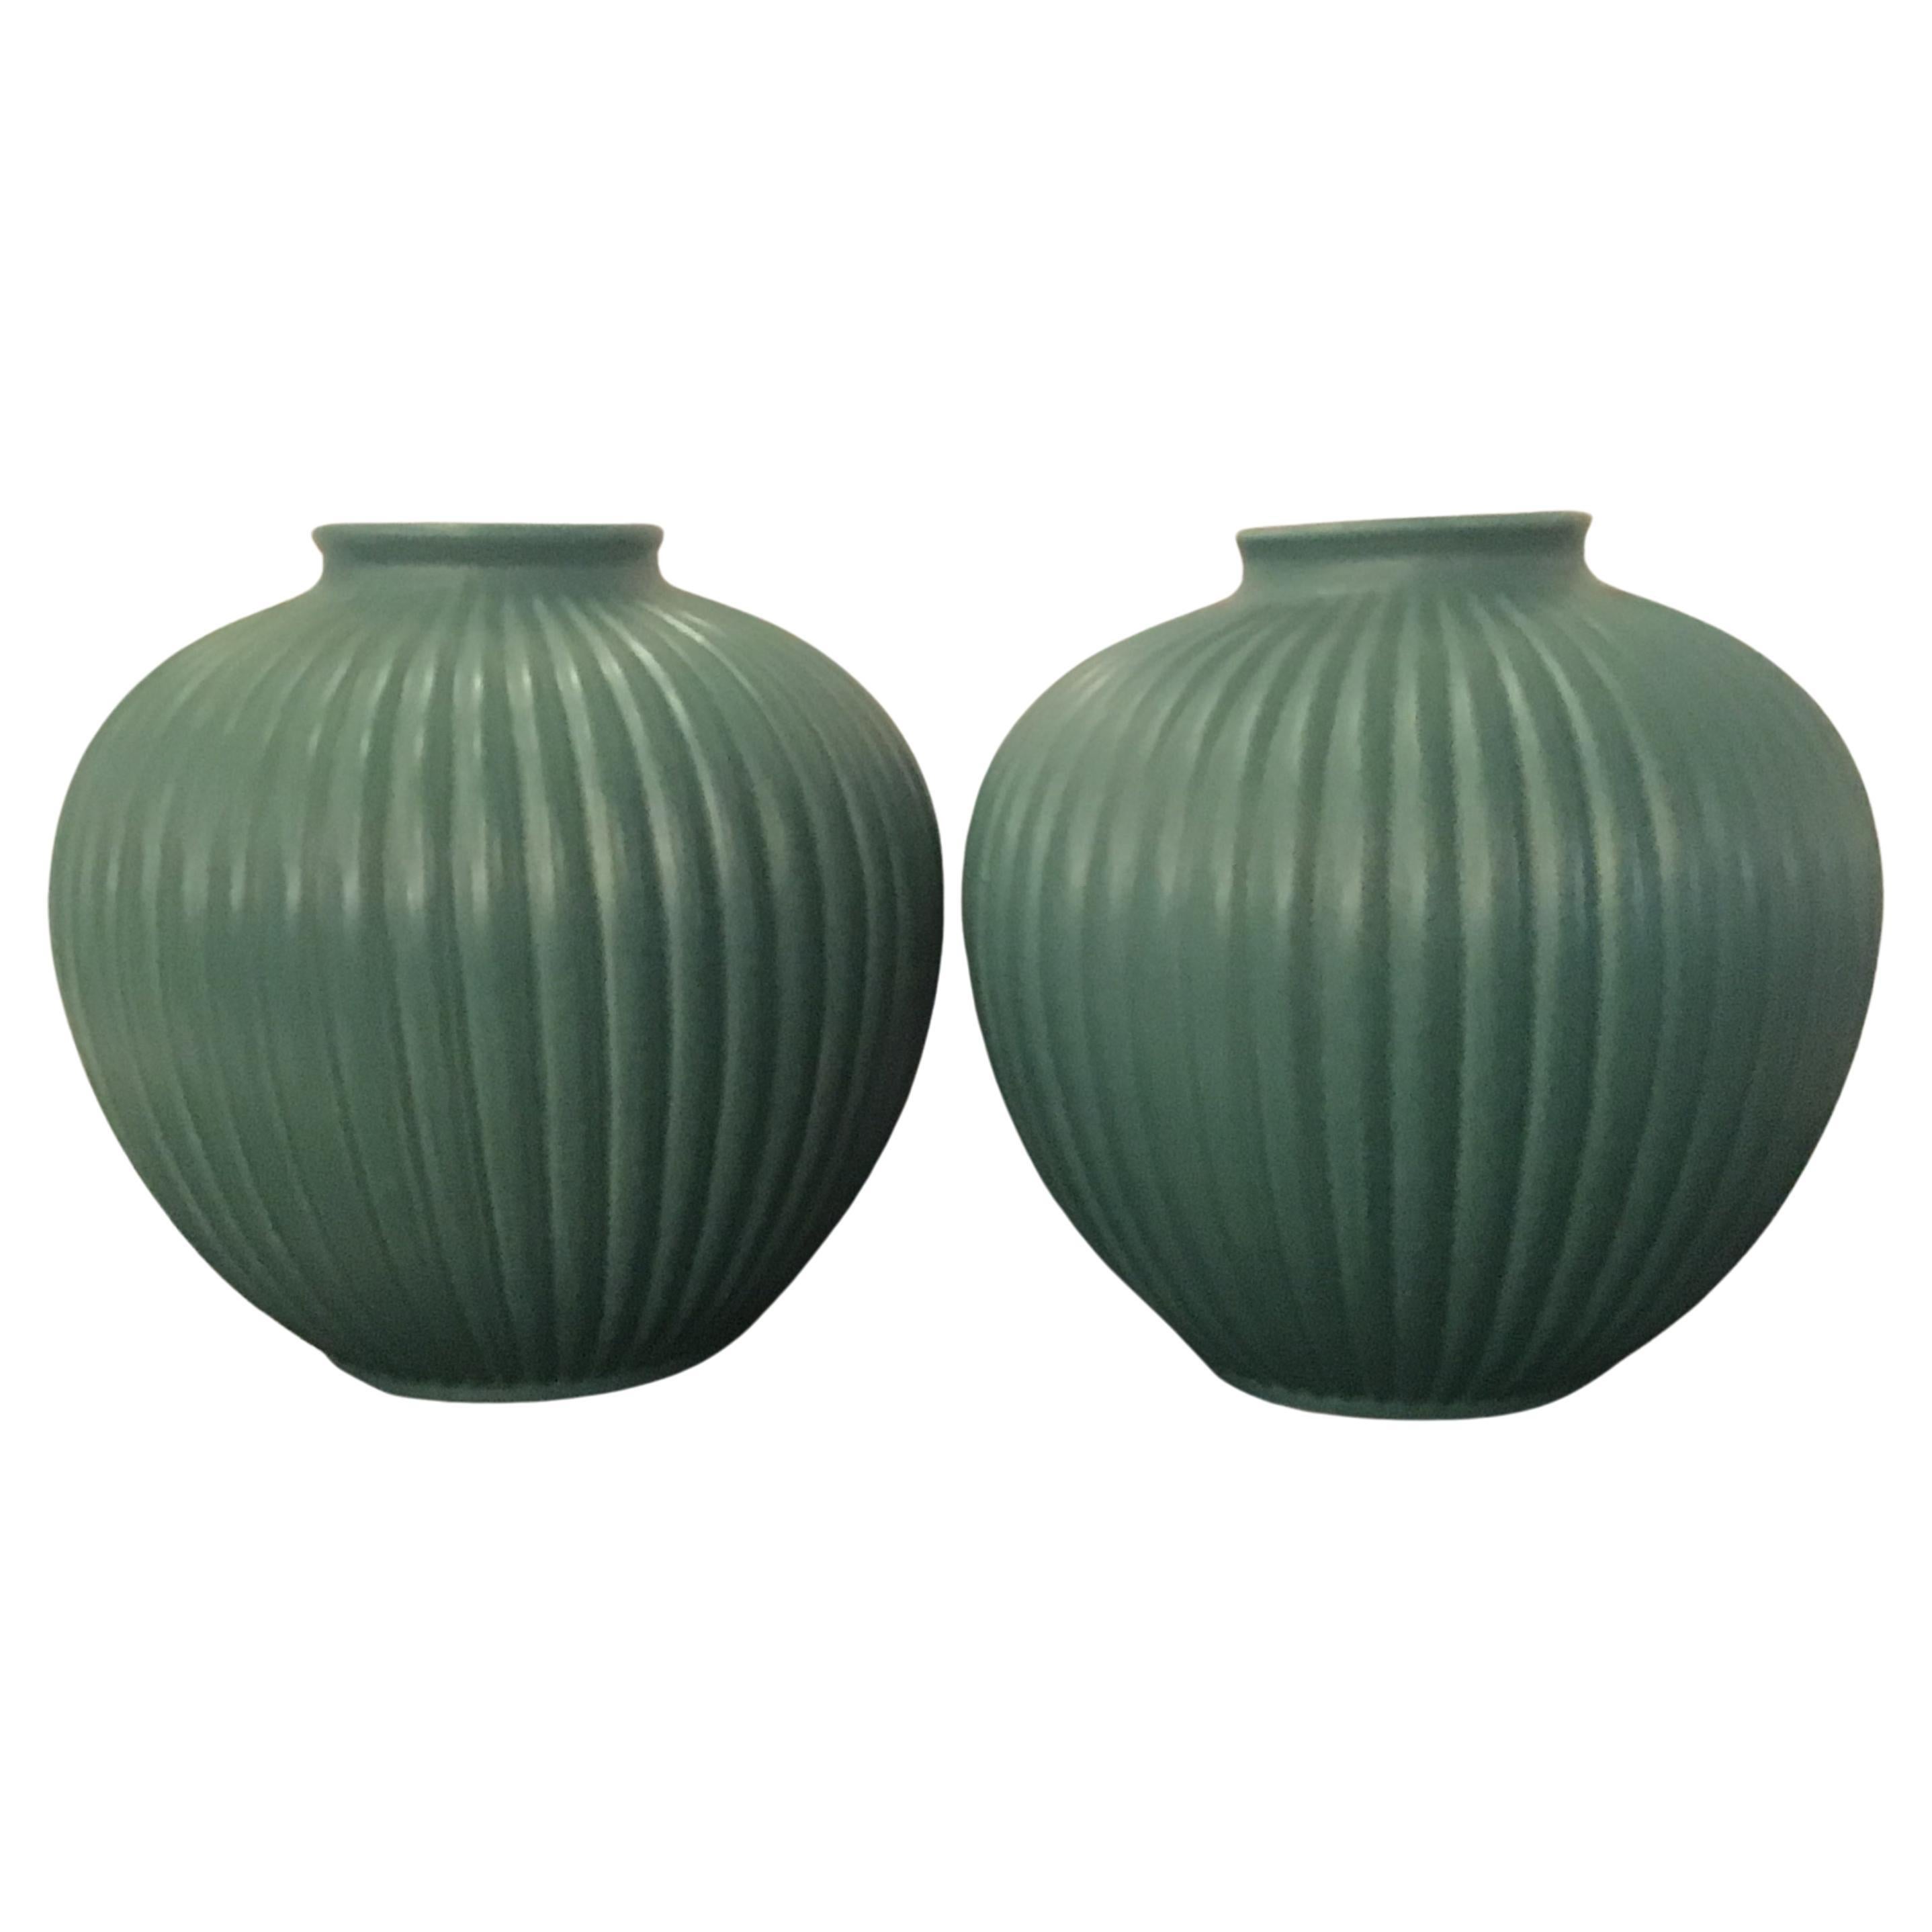 Richard Ginori Giovanni Gariboldi Pair of Vases Green Ceramic 1950 Italy For Sale